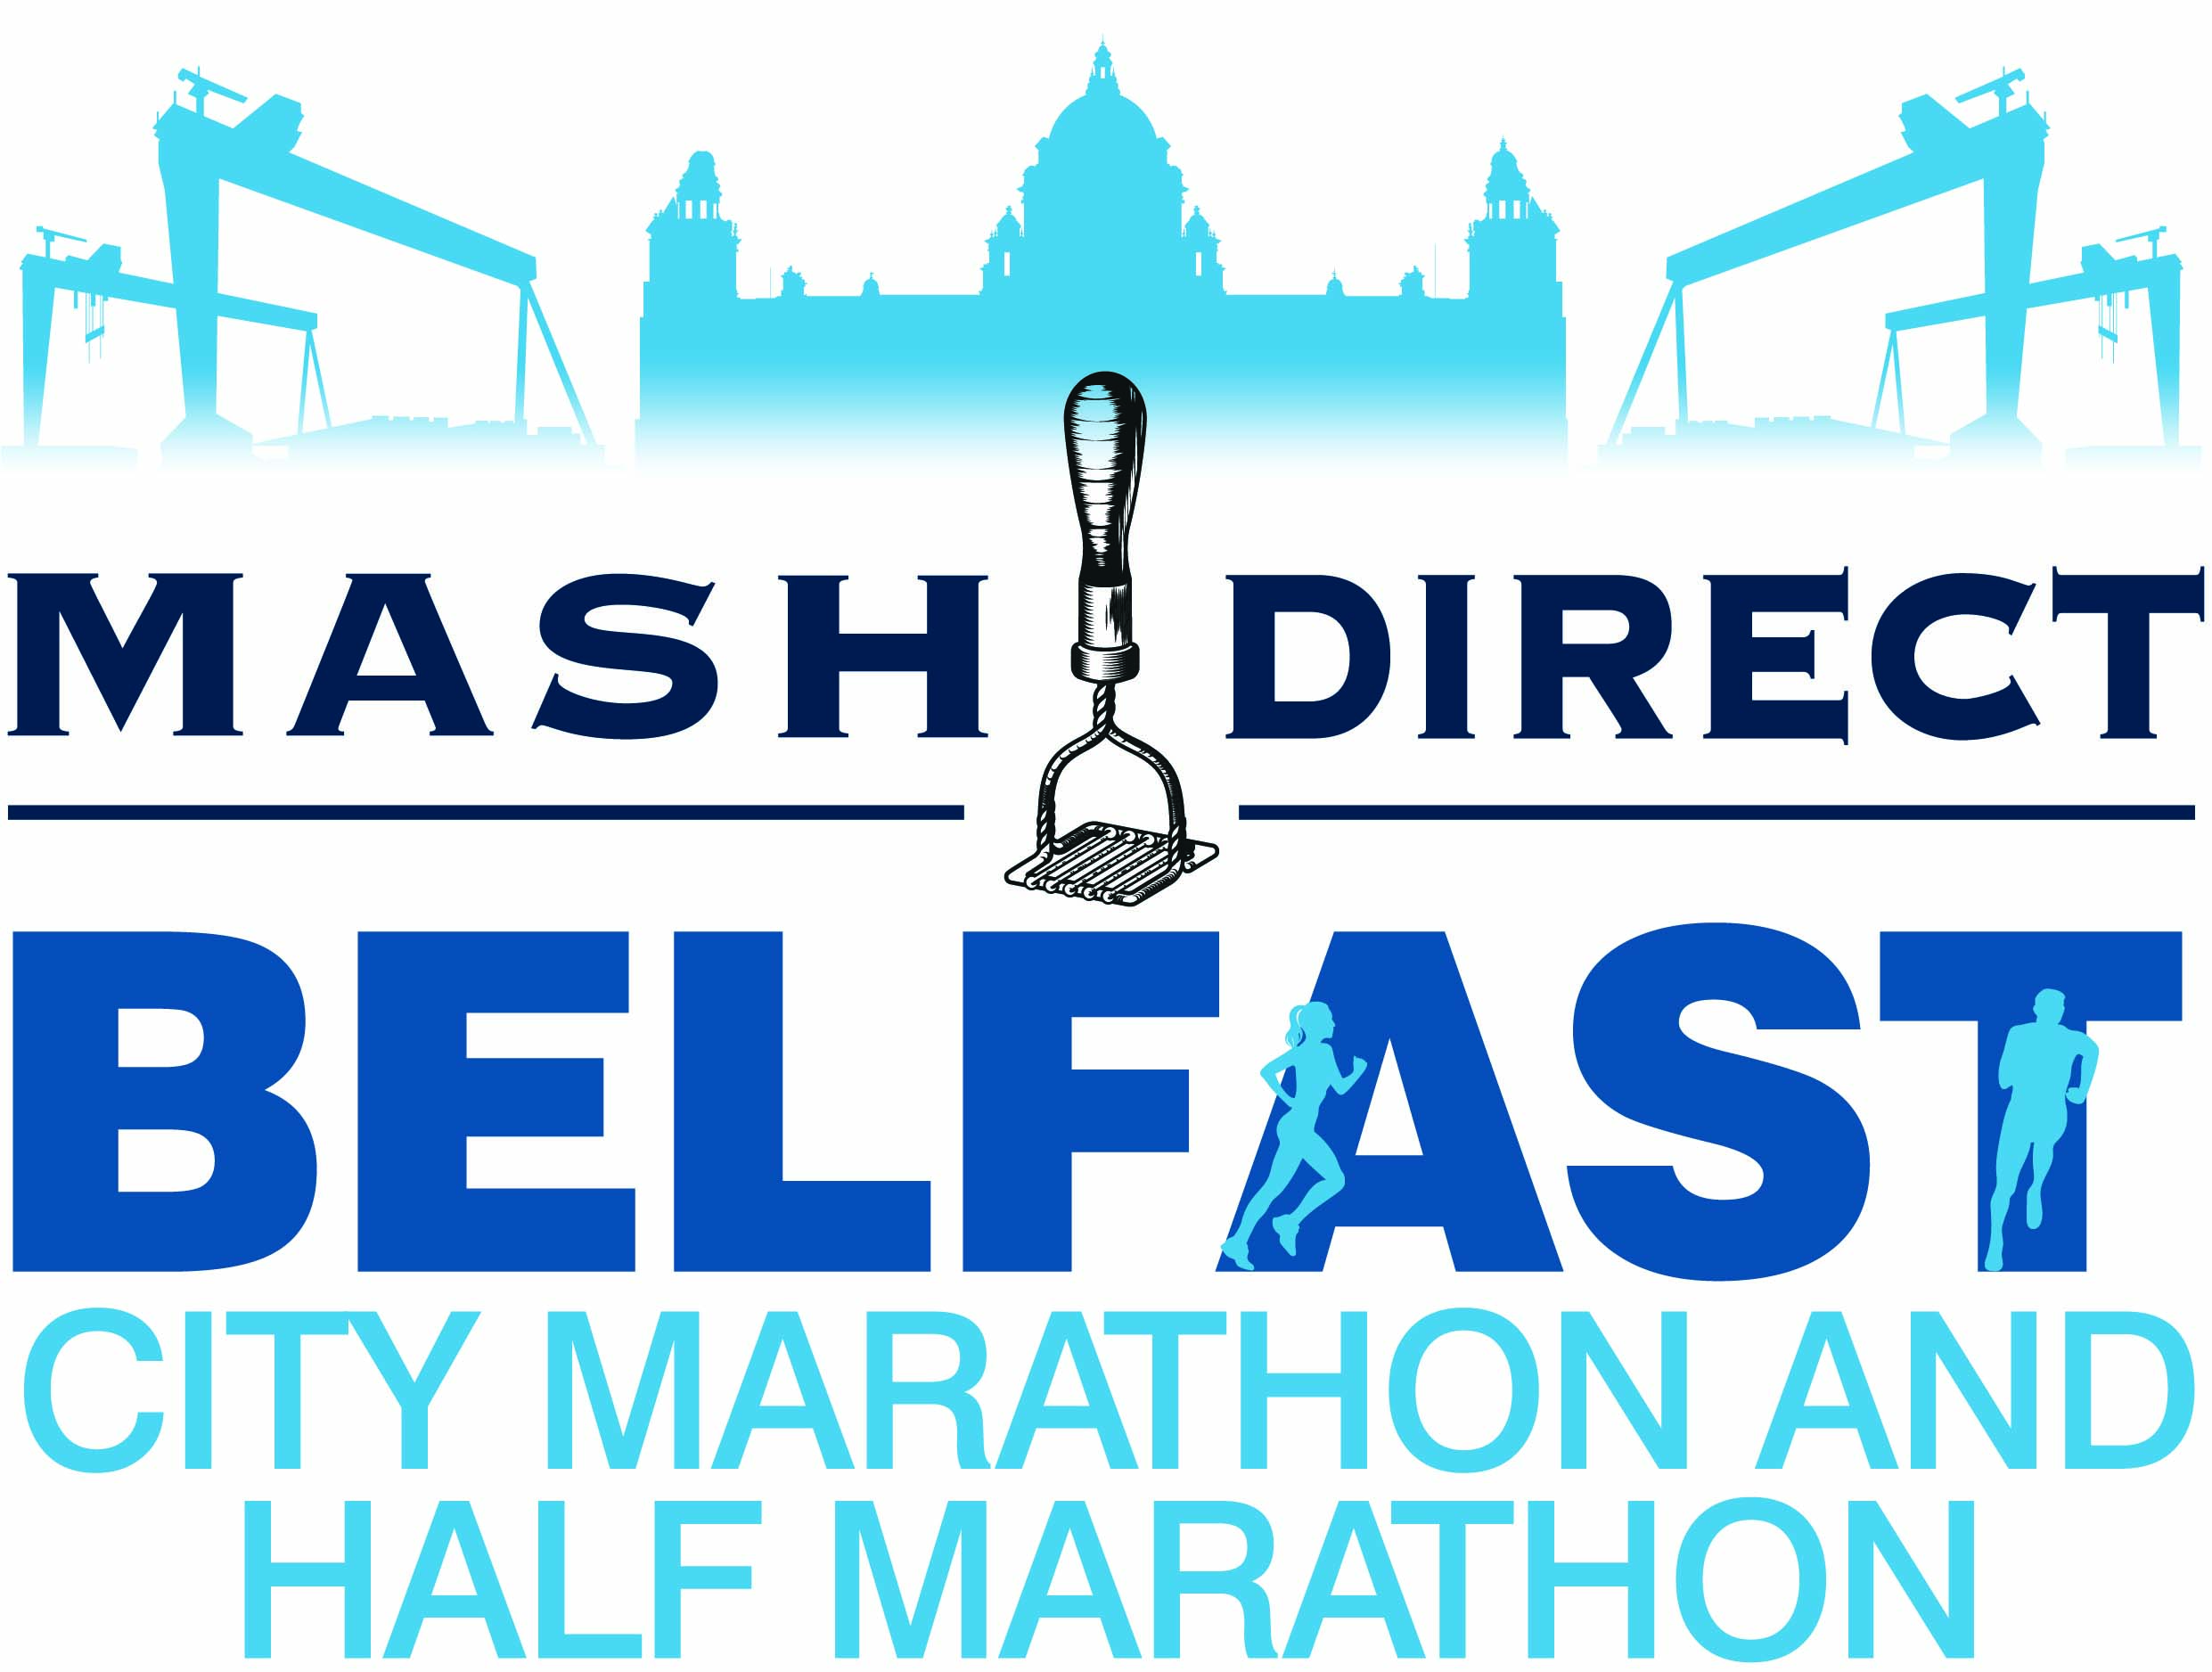 Mash Direct Belfast City Marathon